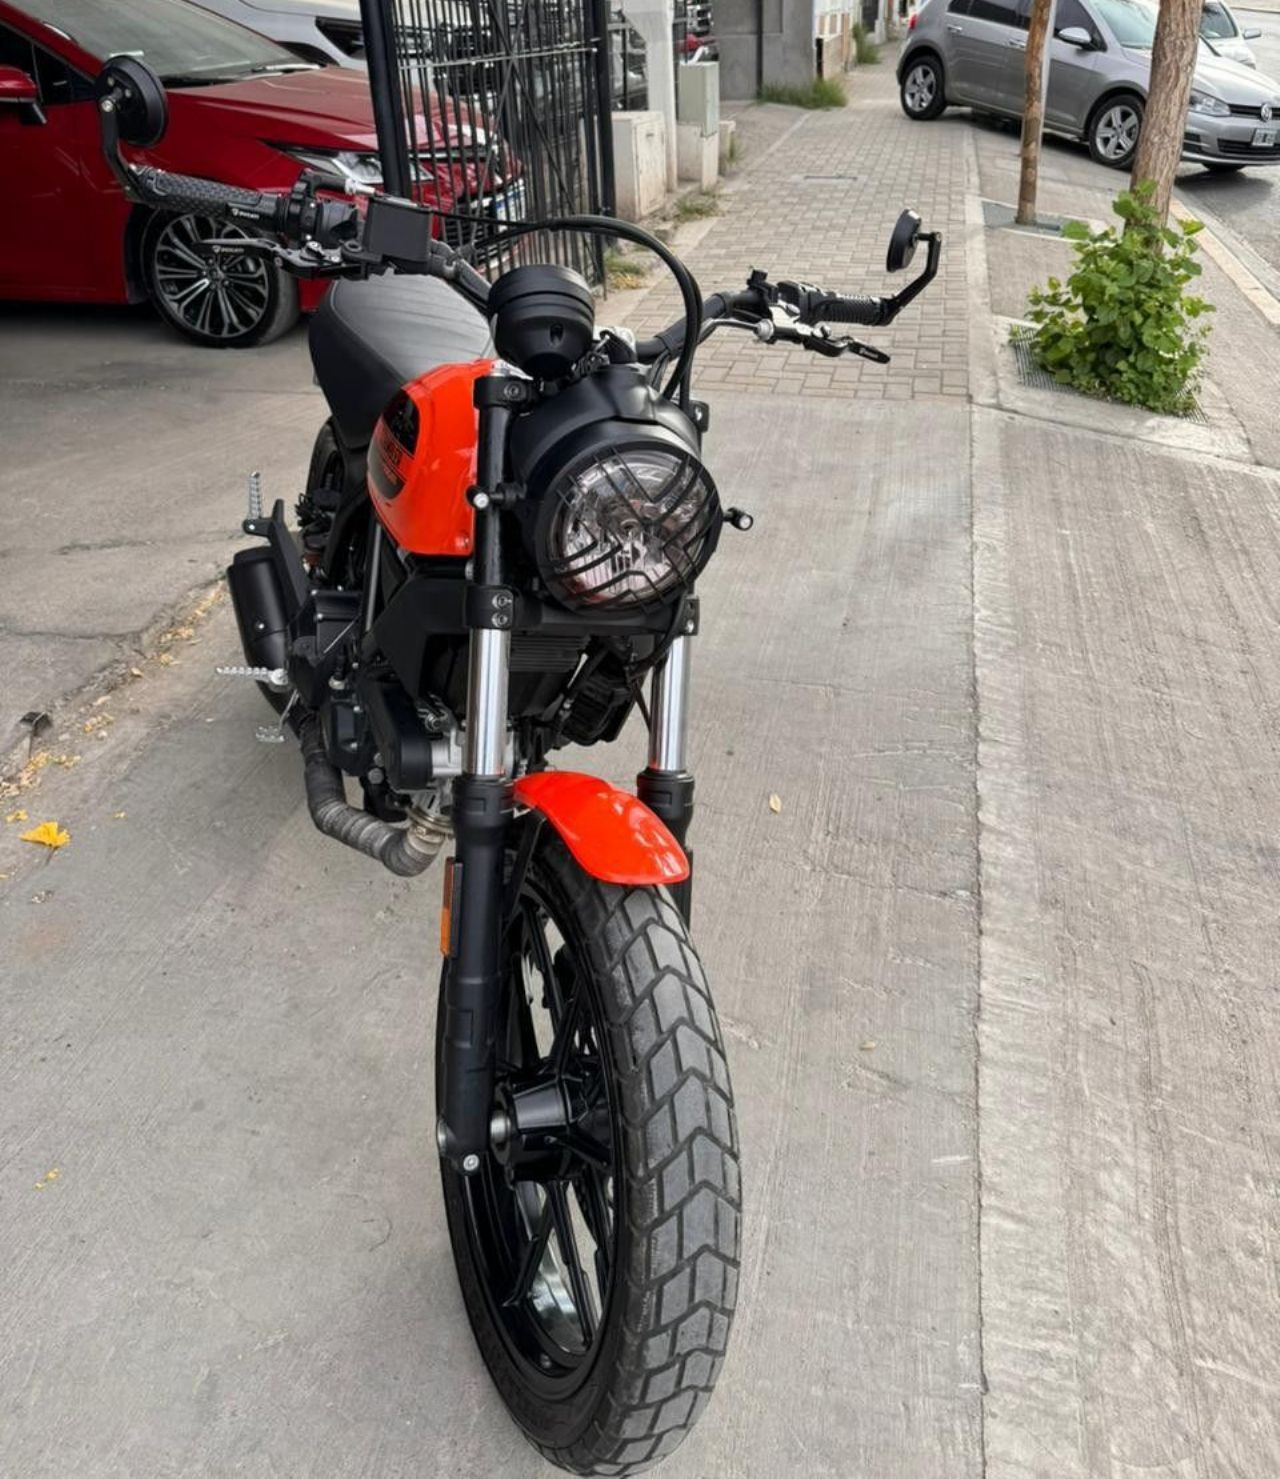 Ducati Scrambler Usada en San Juan, deRuedas